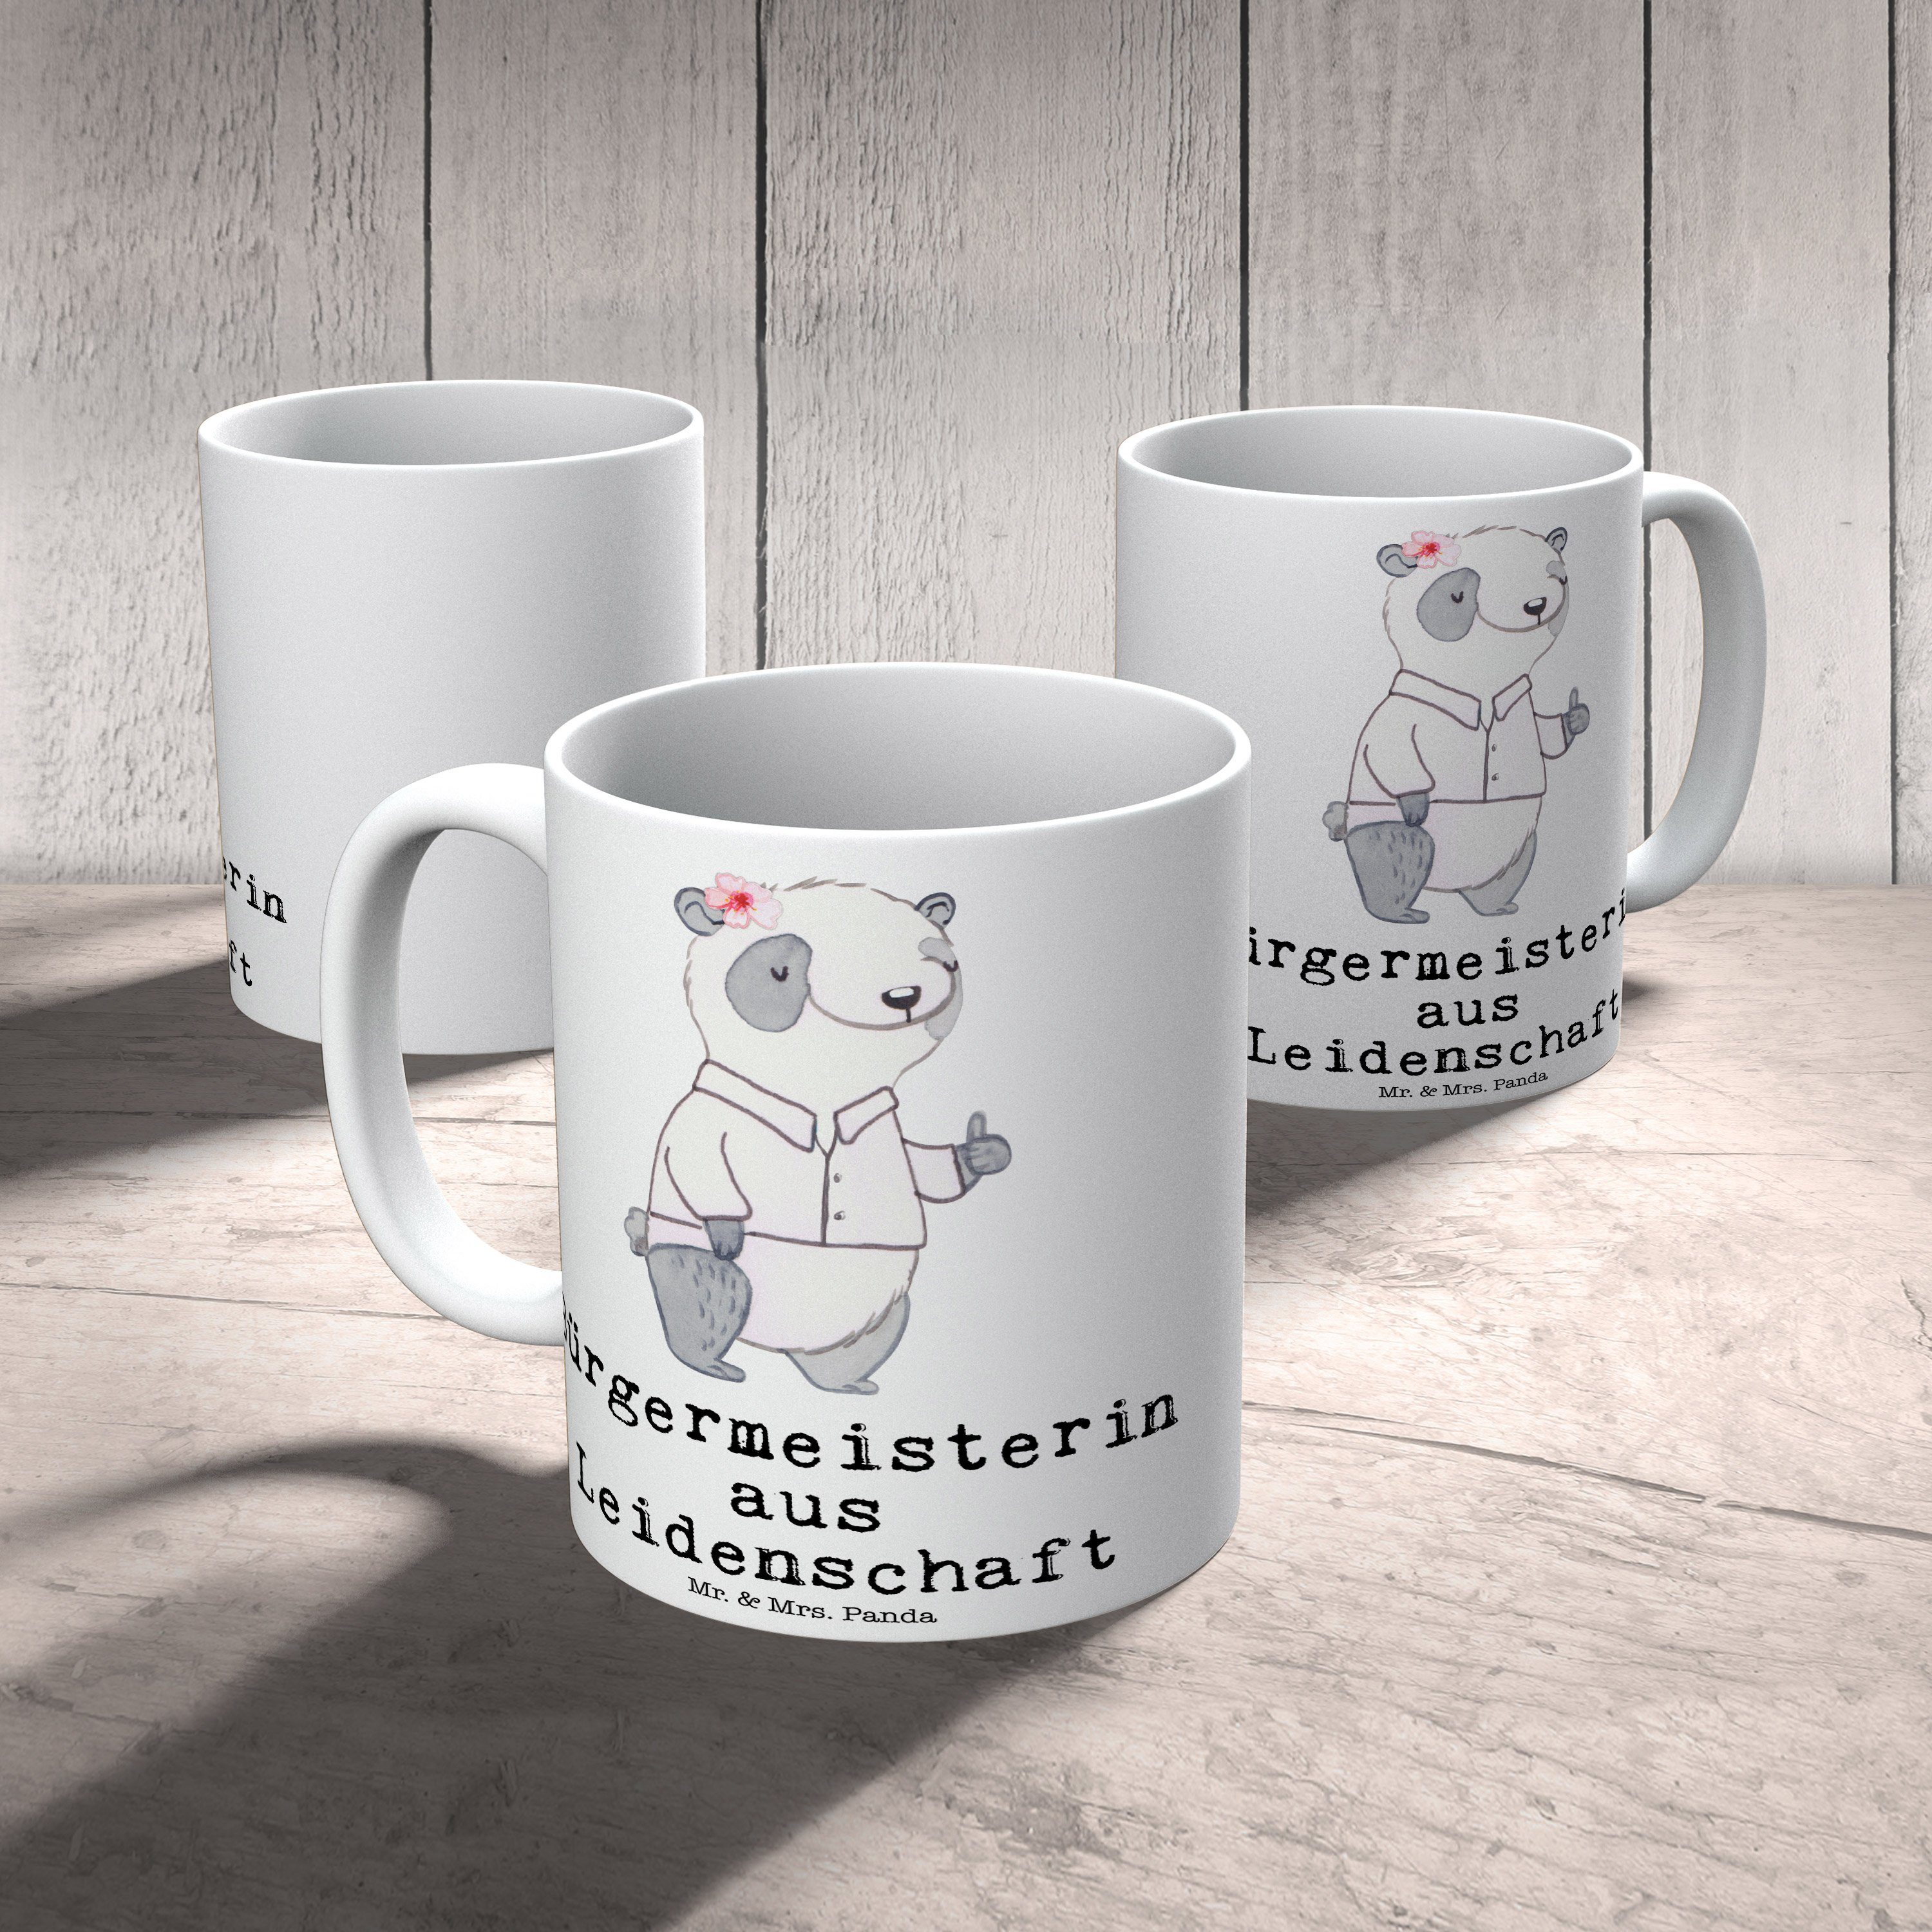 Mr. & - Panda Tasse Weiß Leidenschaft aus Bürgermeisterin Kaffeebecher, Geschenk, - Mrs. Keramik Mit